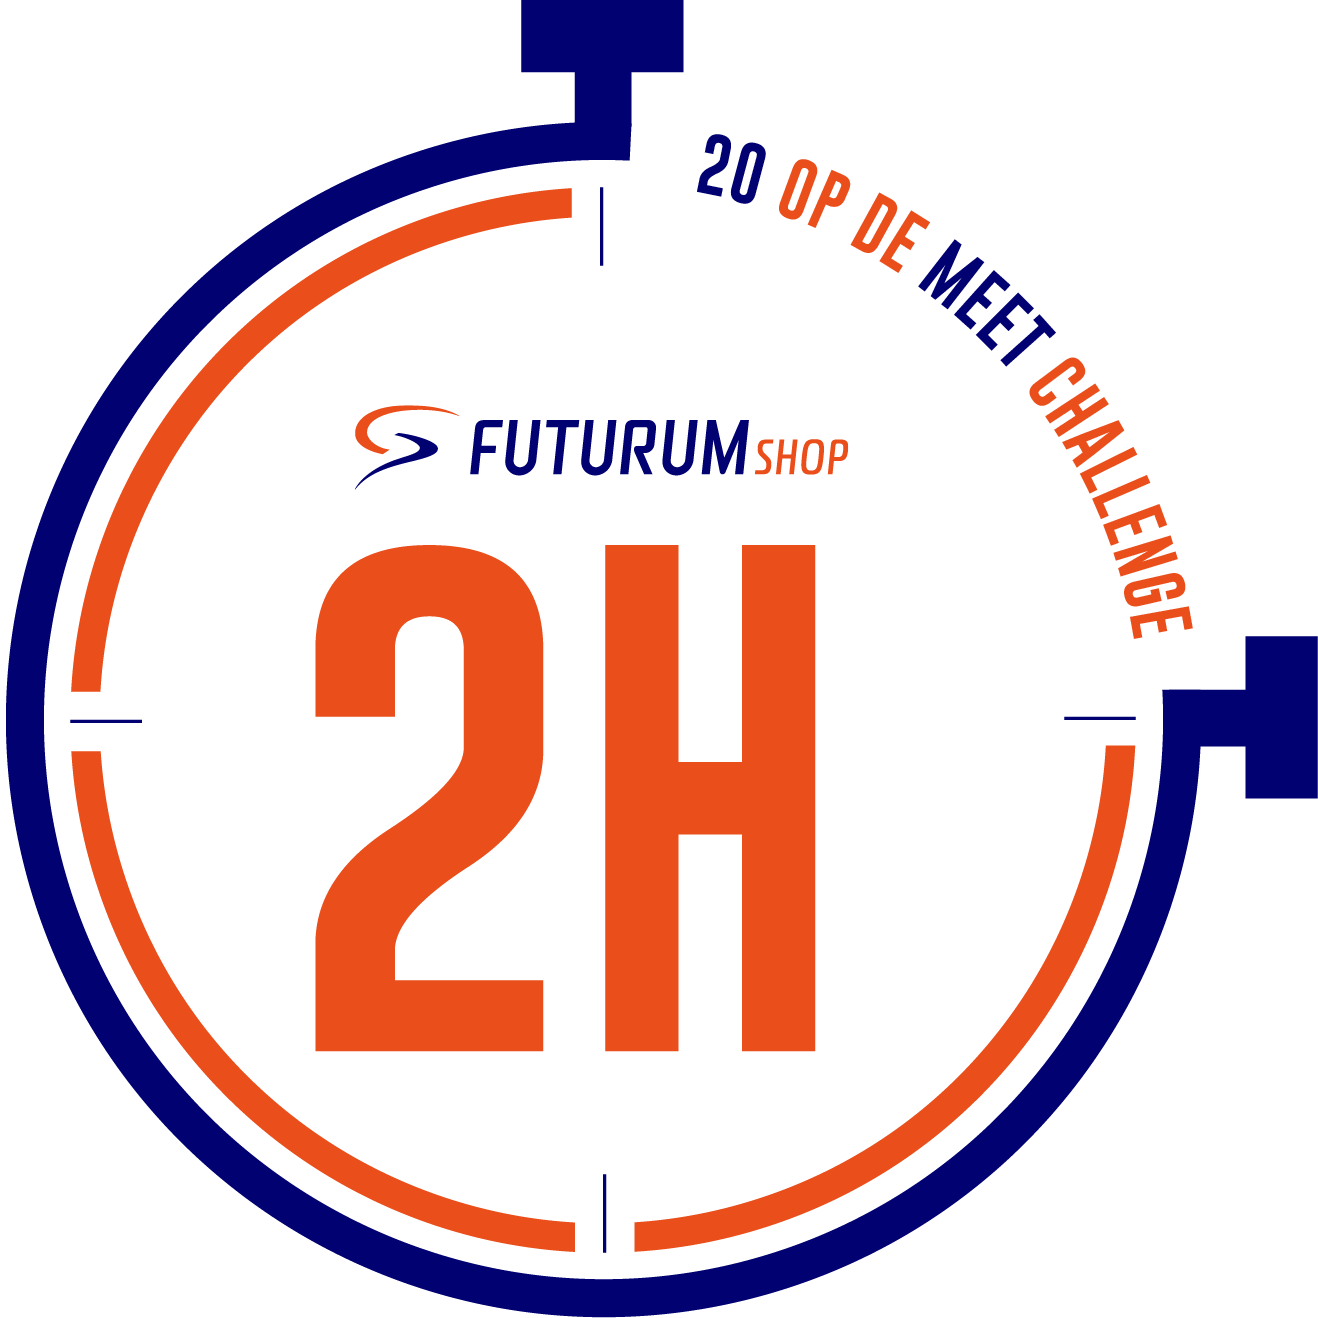 FuturumShop | 20 on the finish challenge